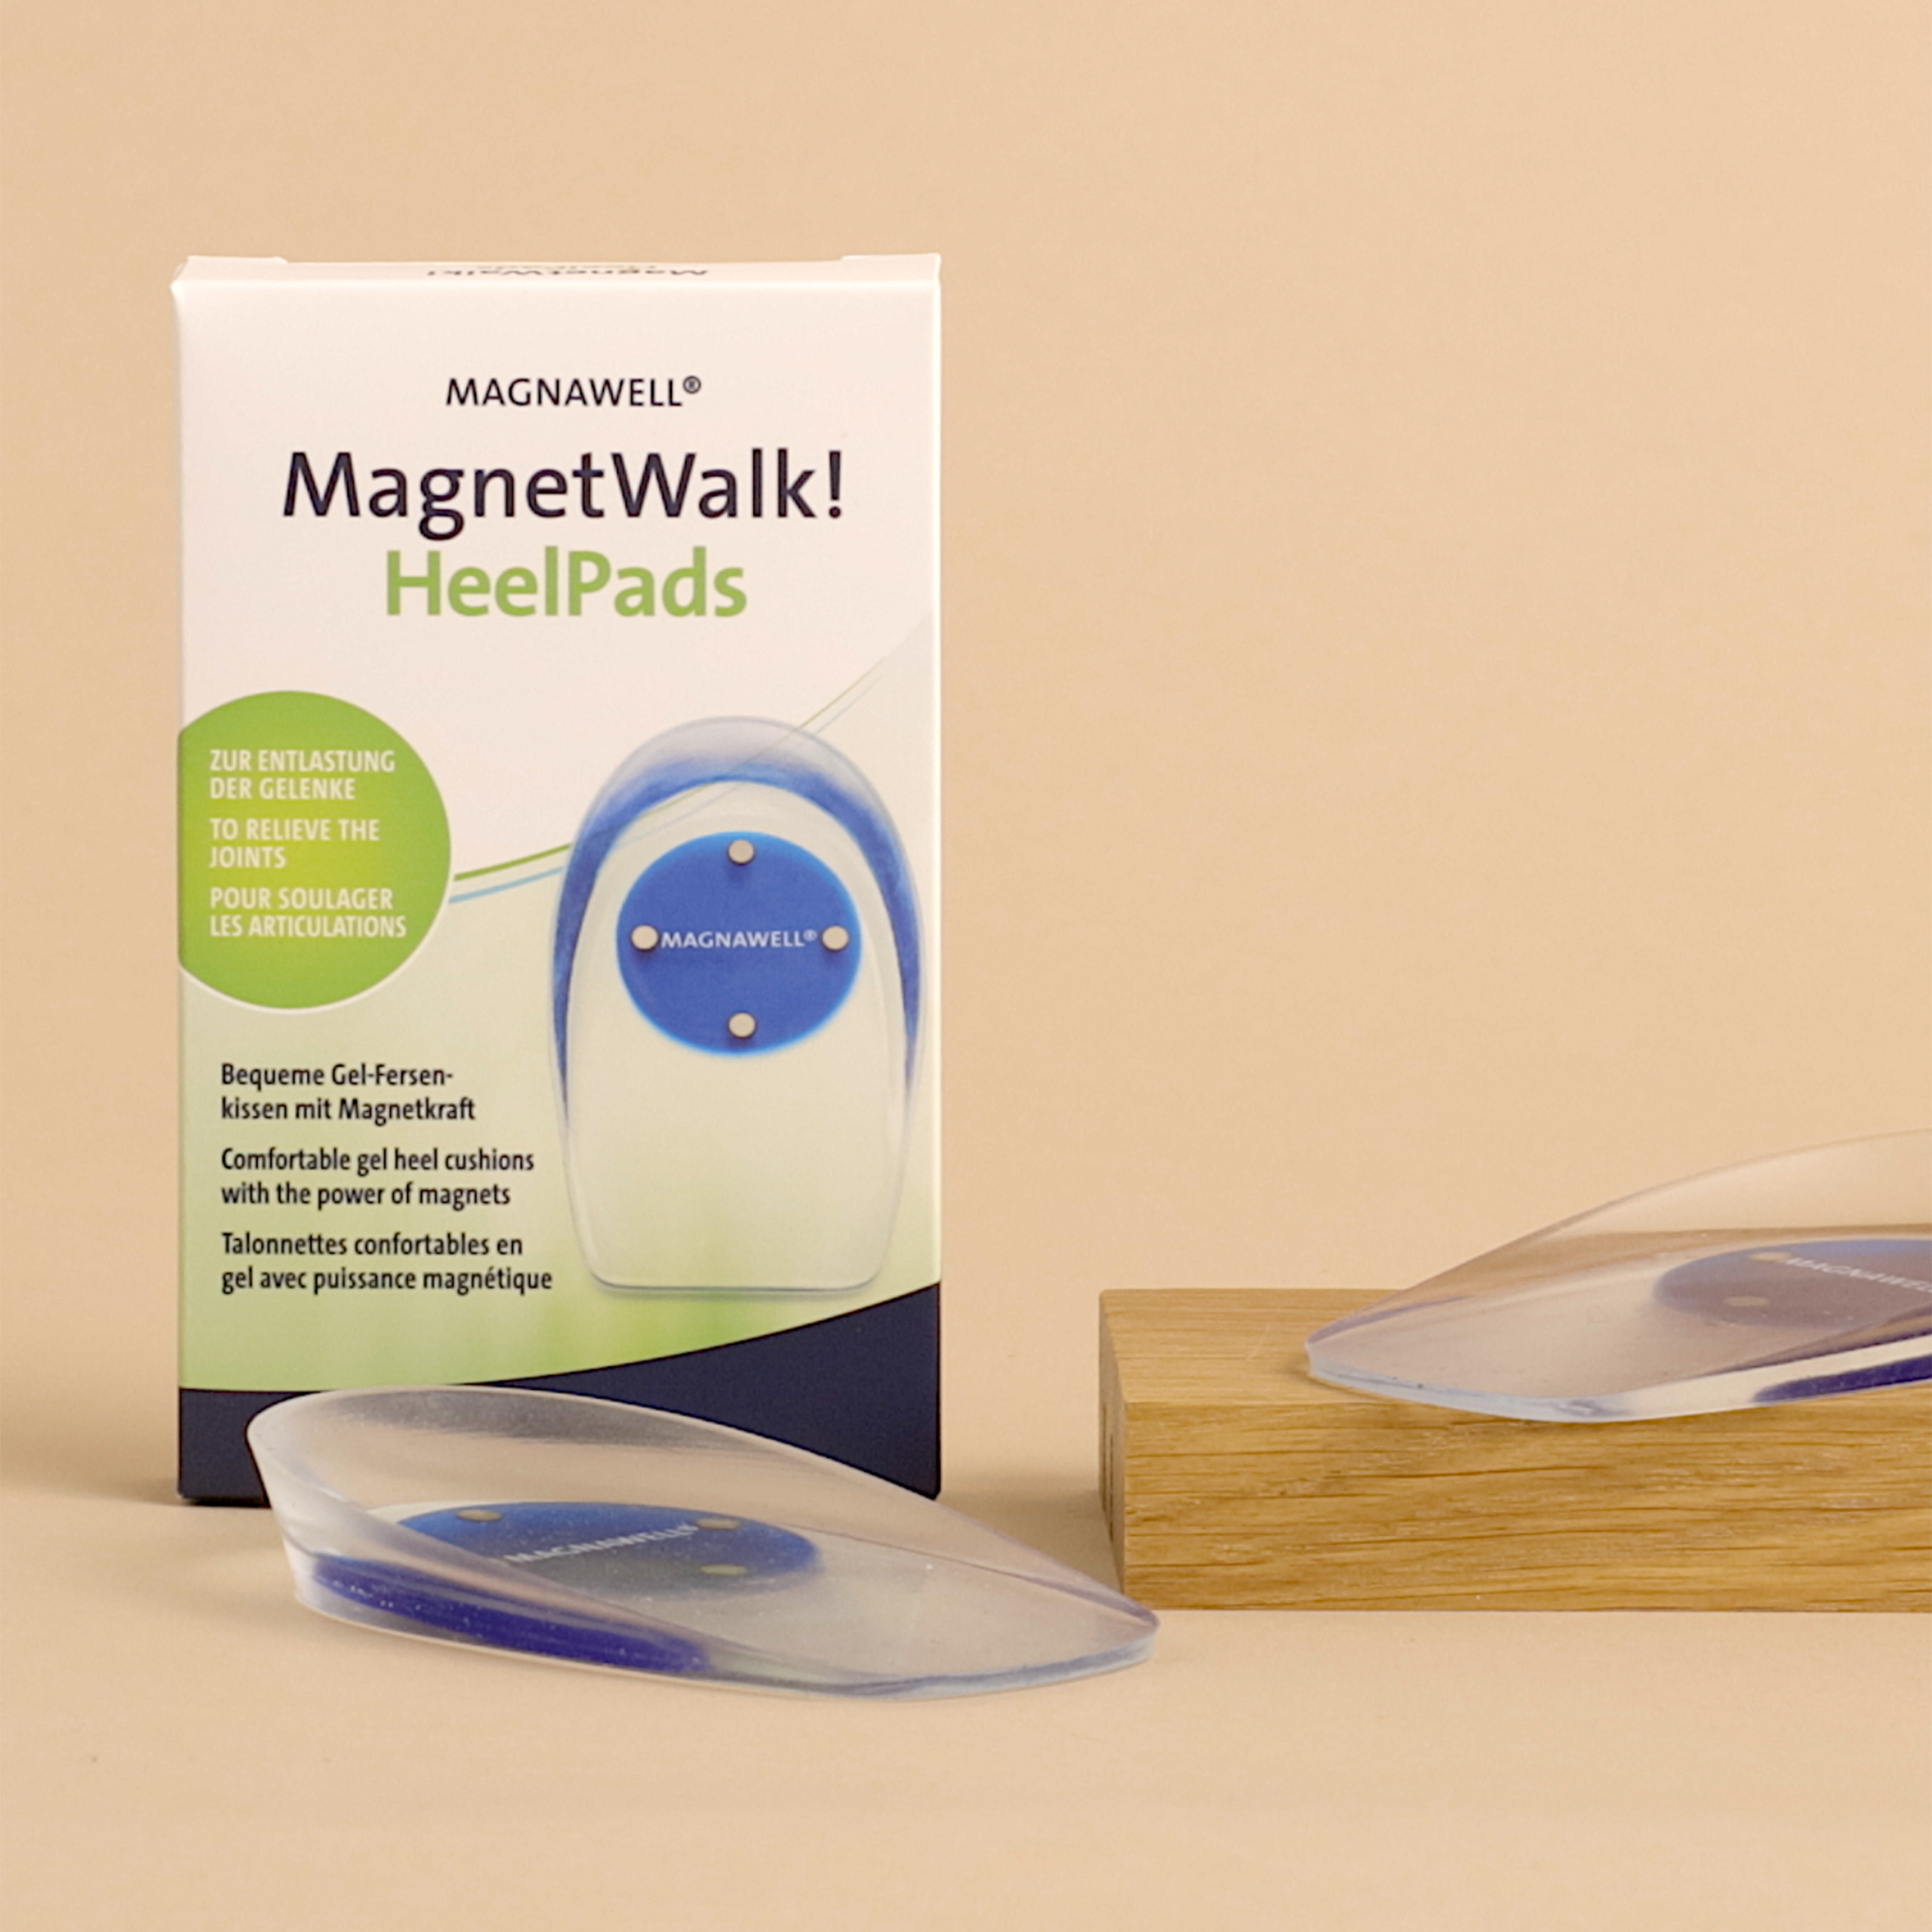 MagnetWalk! HeelPads